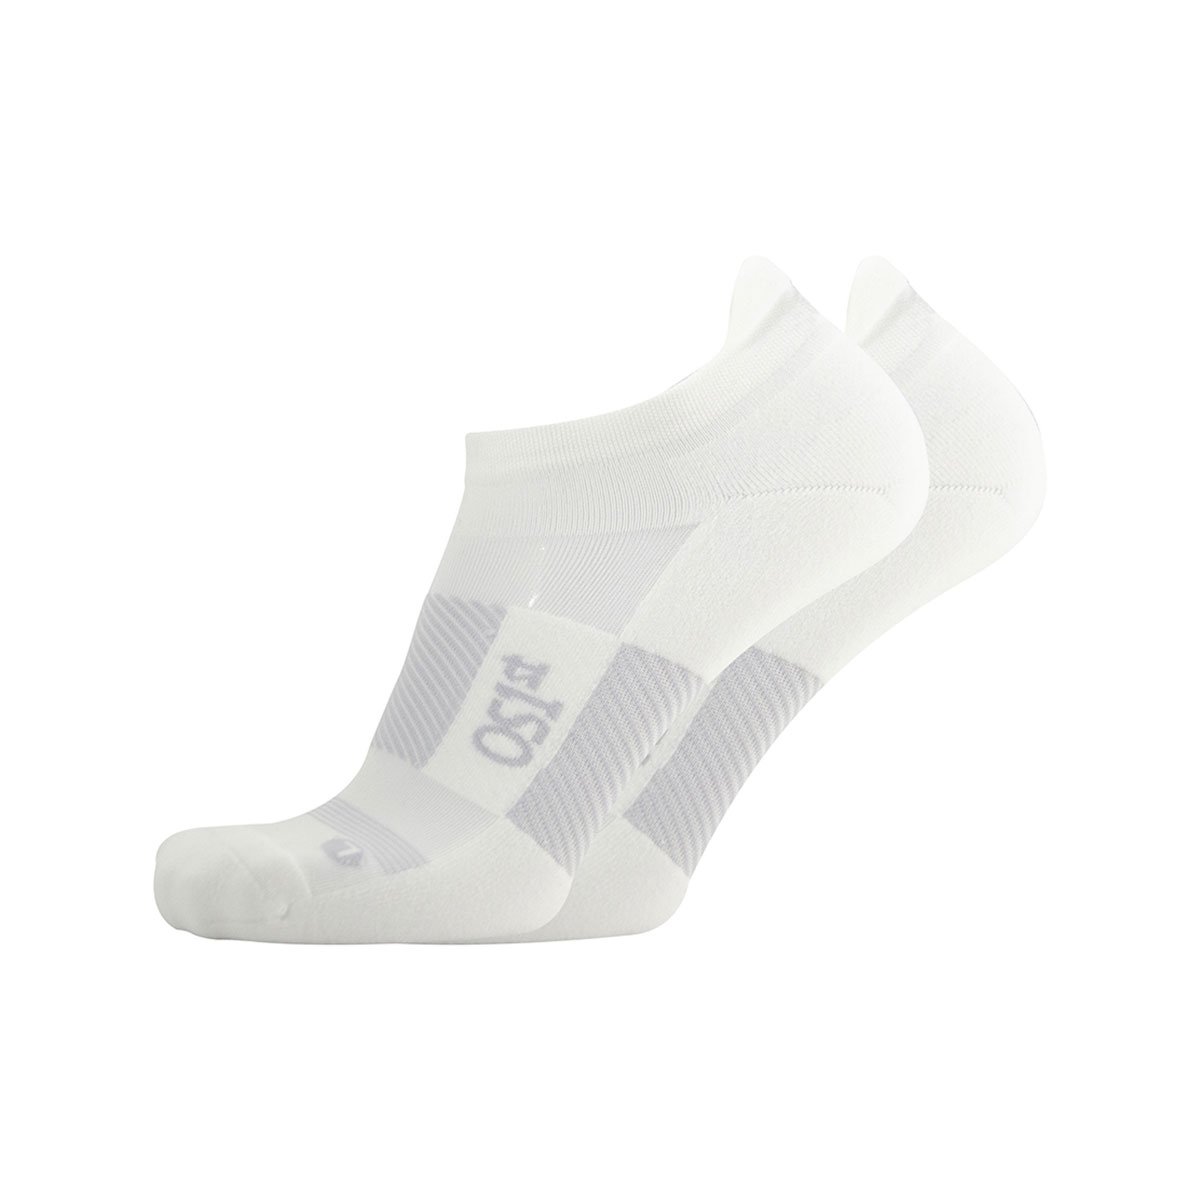 FootBalance TA4 Spor Çorabı - Siyah - 1